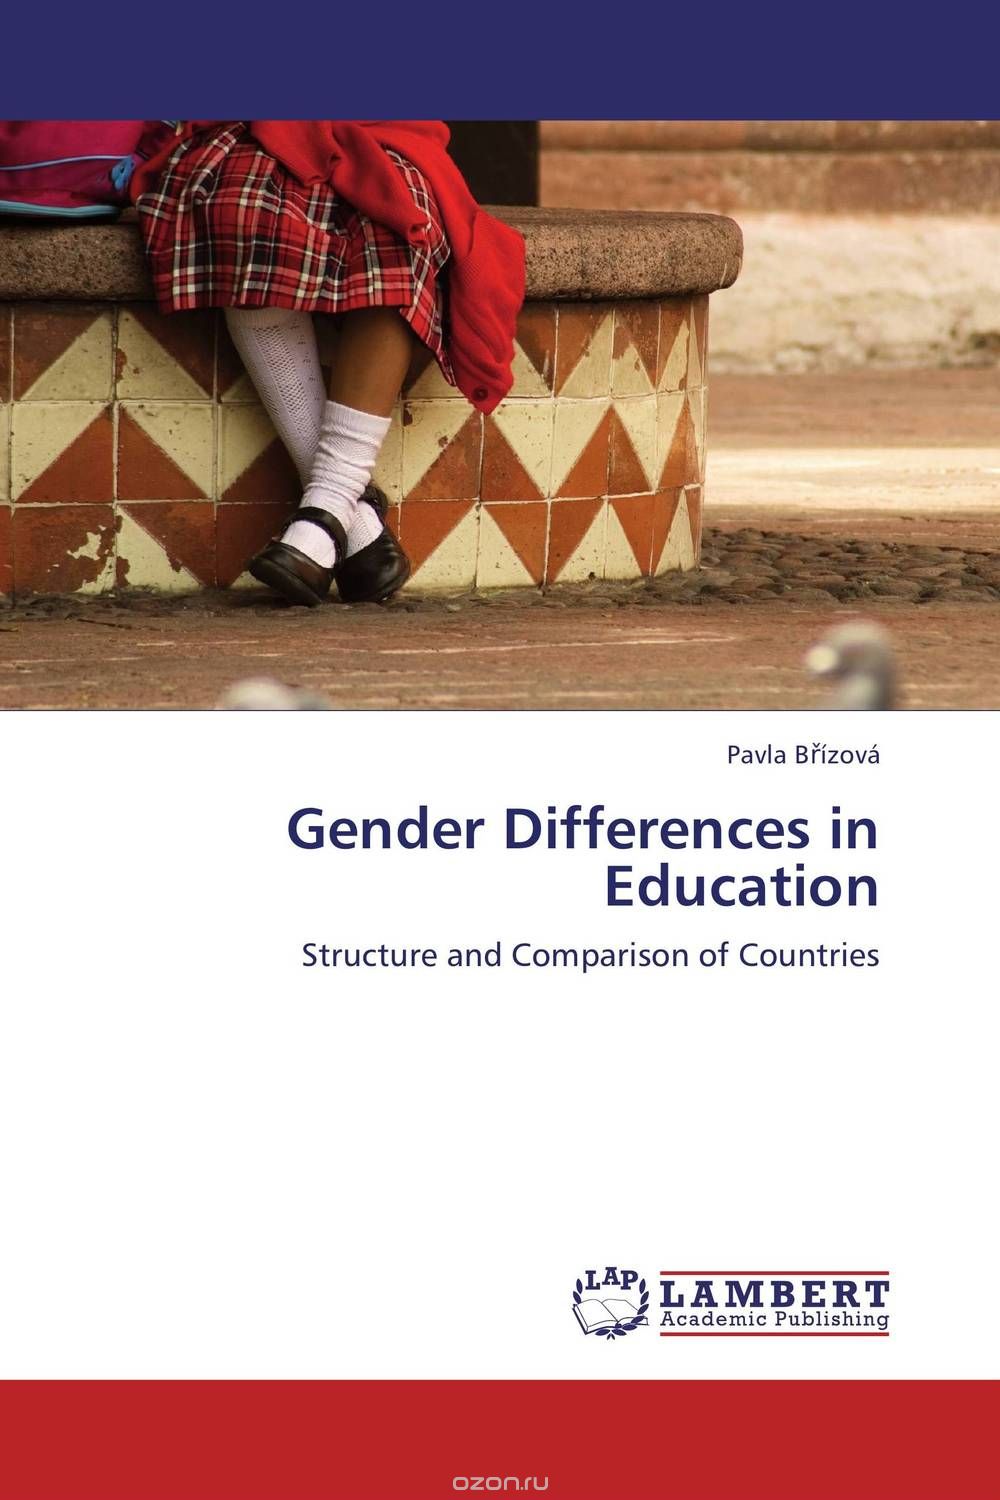 Скачать книгу "Gender Differences in Education"